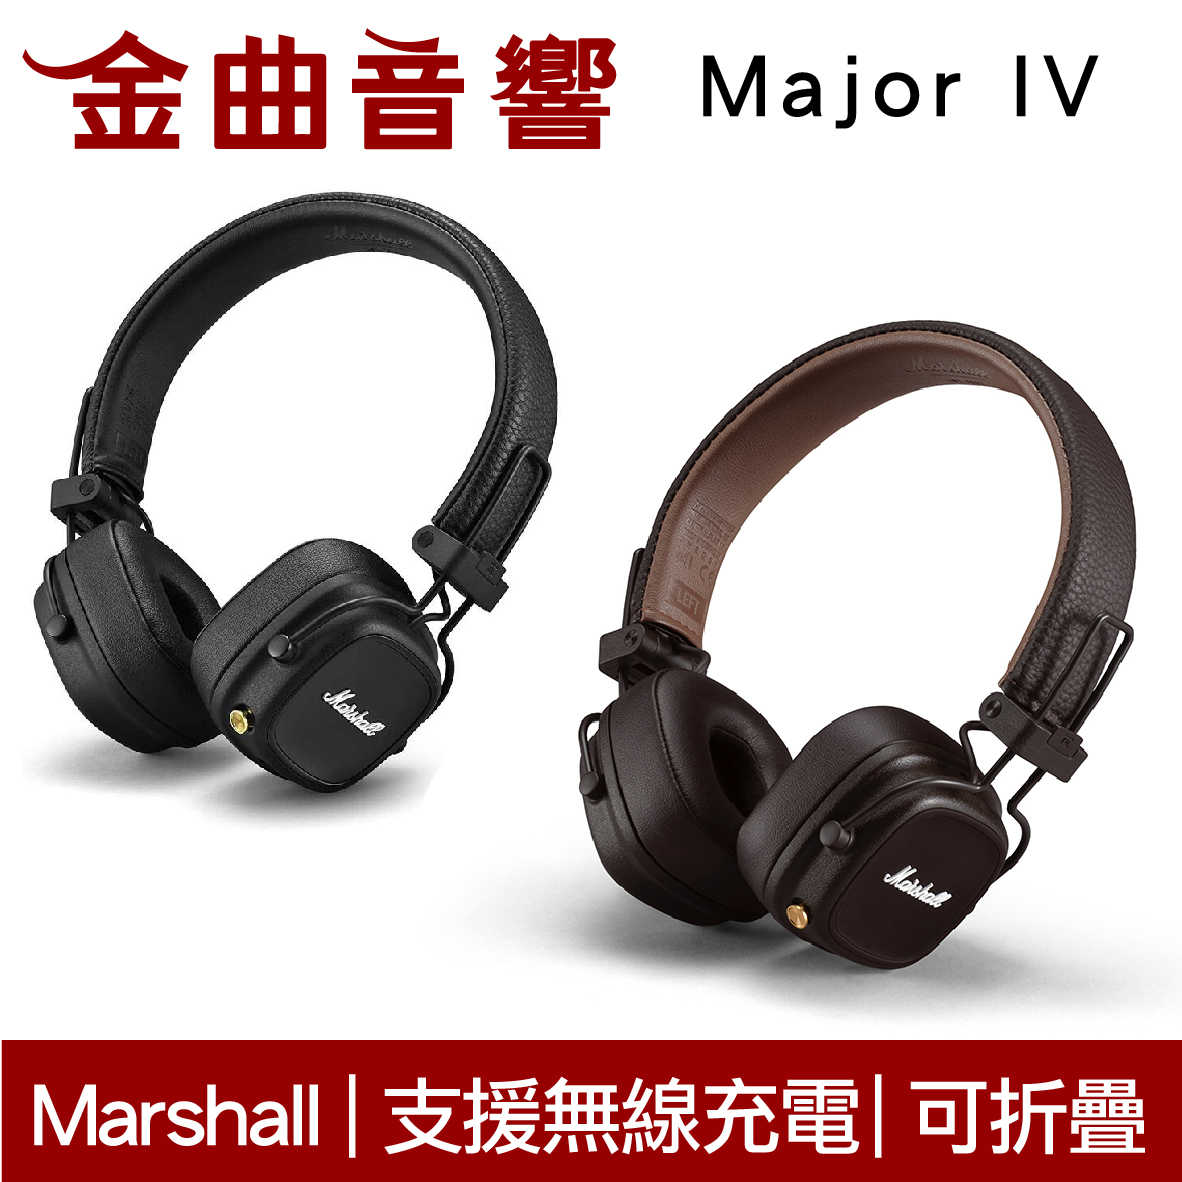 Marshall 馬歇爾 Major IV 兒童 大人 皆適用 可折疊 超強續航力 藍芽 耳罩式 耳機 | 金曲音響